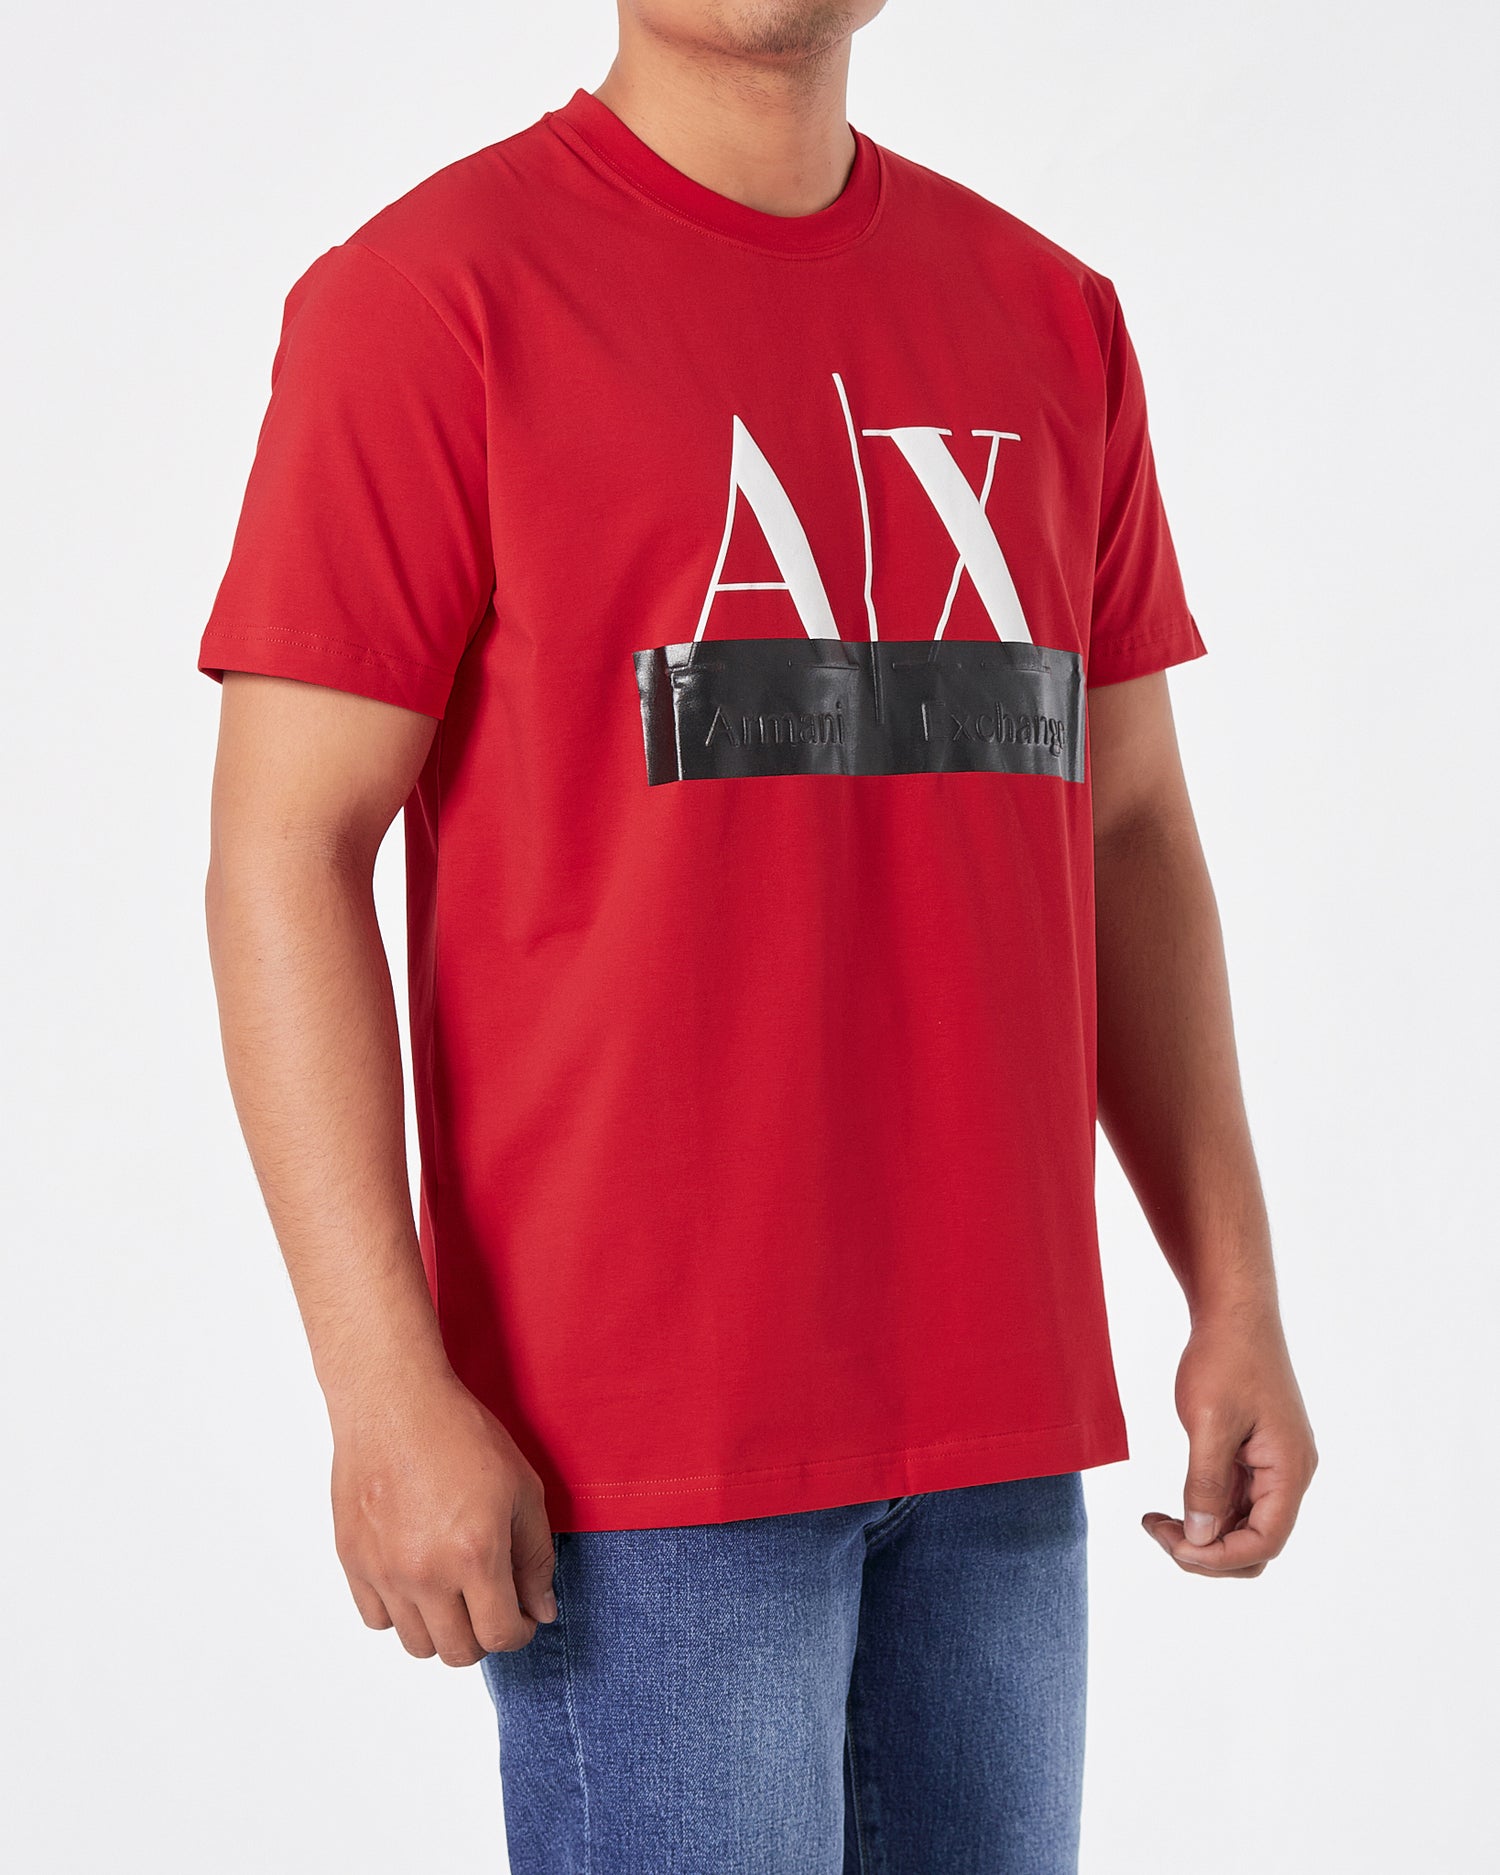 ARM AX Logo Printed Men Red T-Shirt 16.90